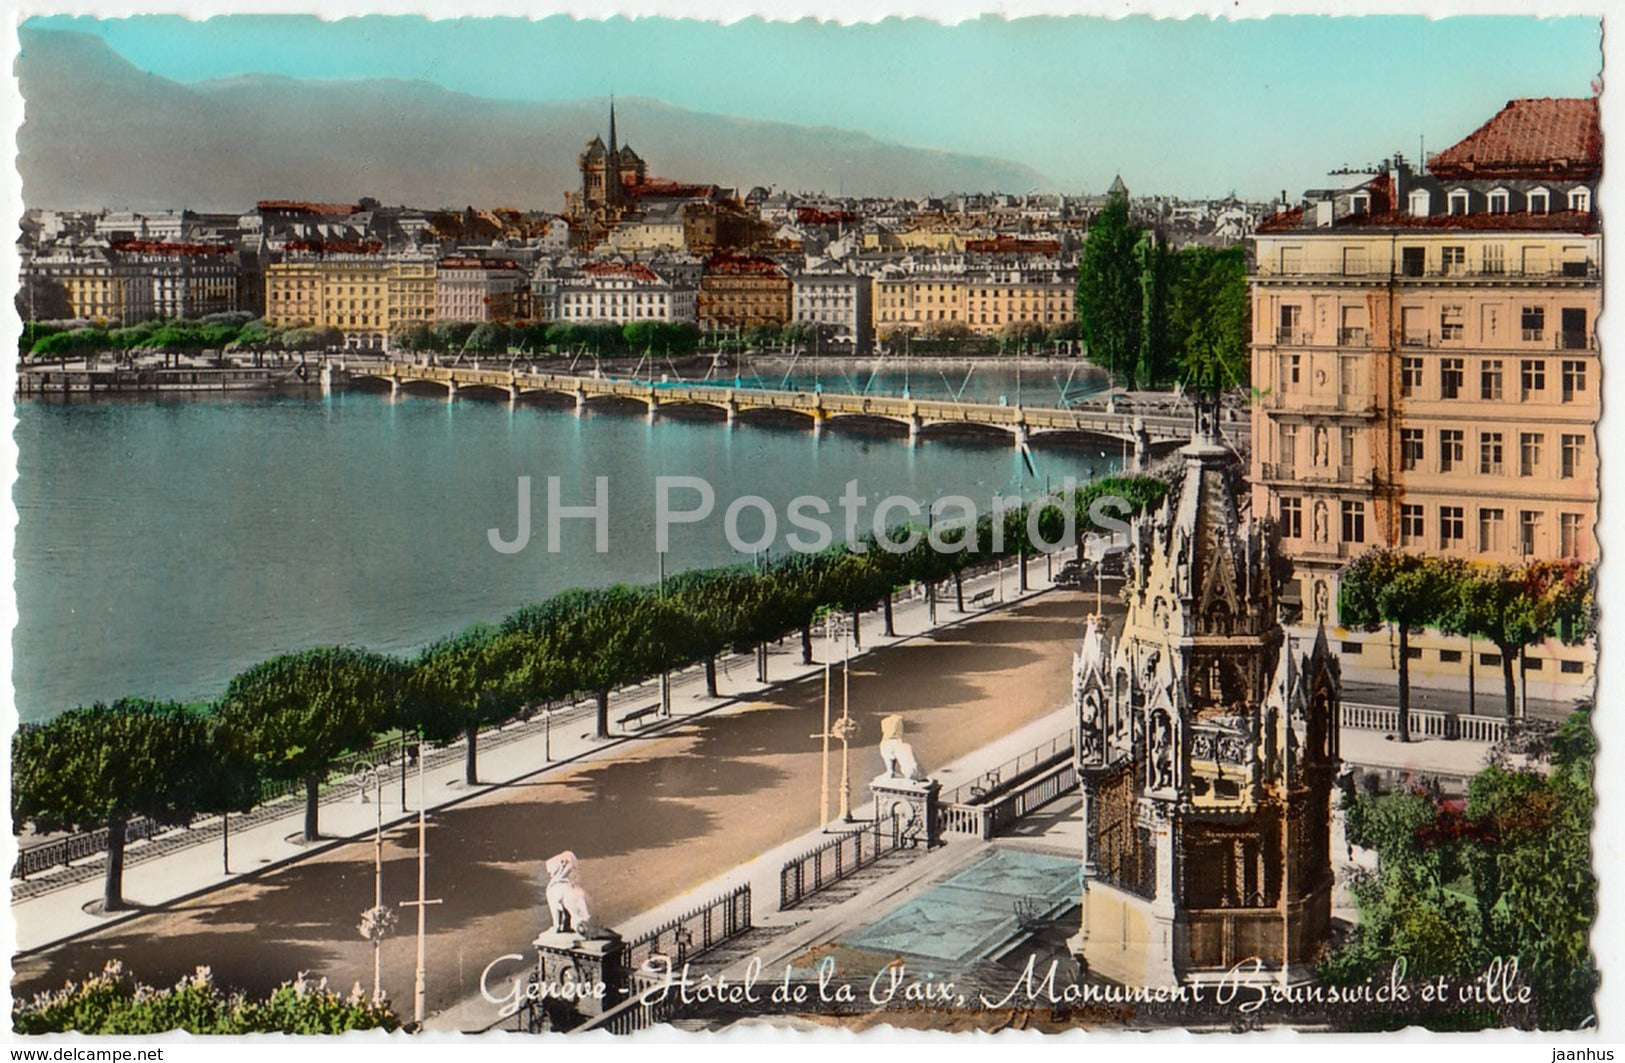 Geneva - Geneve - Hotel de la Paix - monument Brunswick et ville - bridge - 1956 - Switzerland - used - JH Postcards